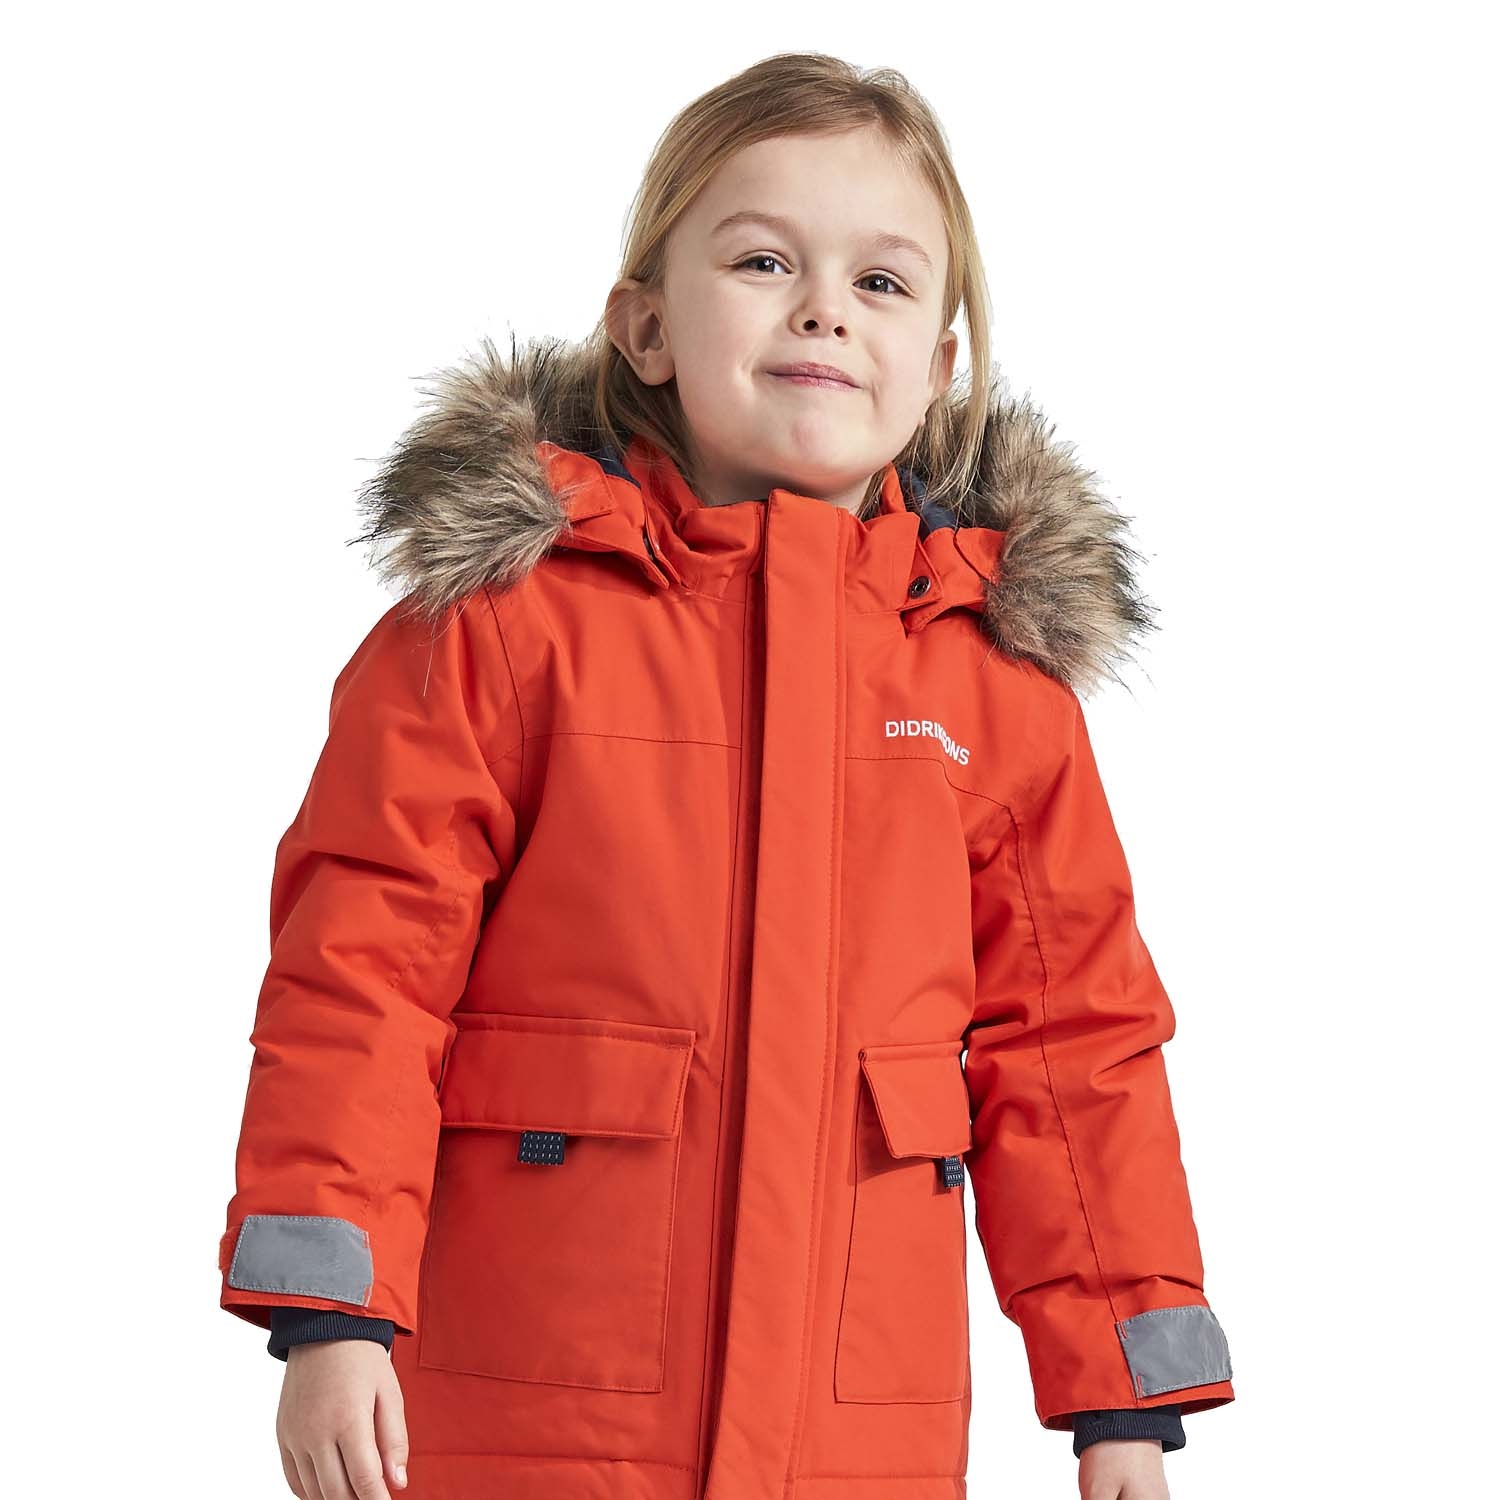 Didriksons Polarbjornen Parka Ski Jacket Orange 2021